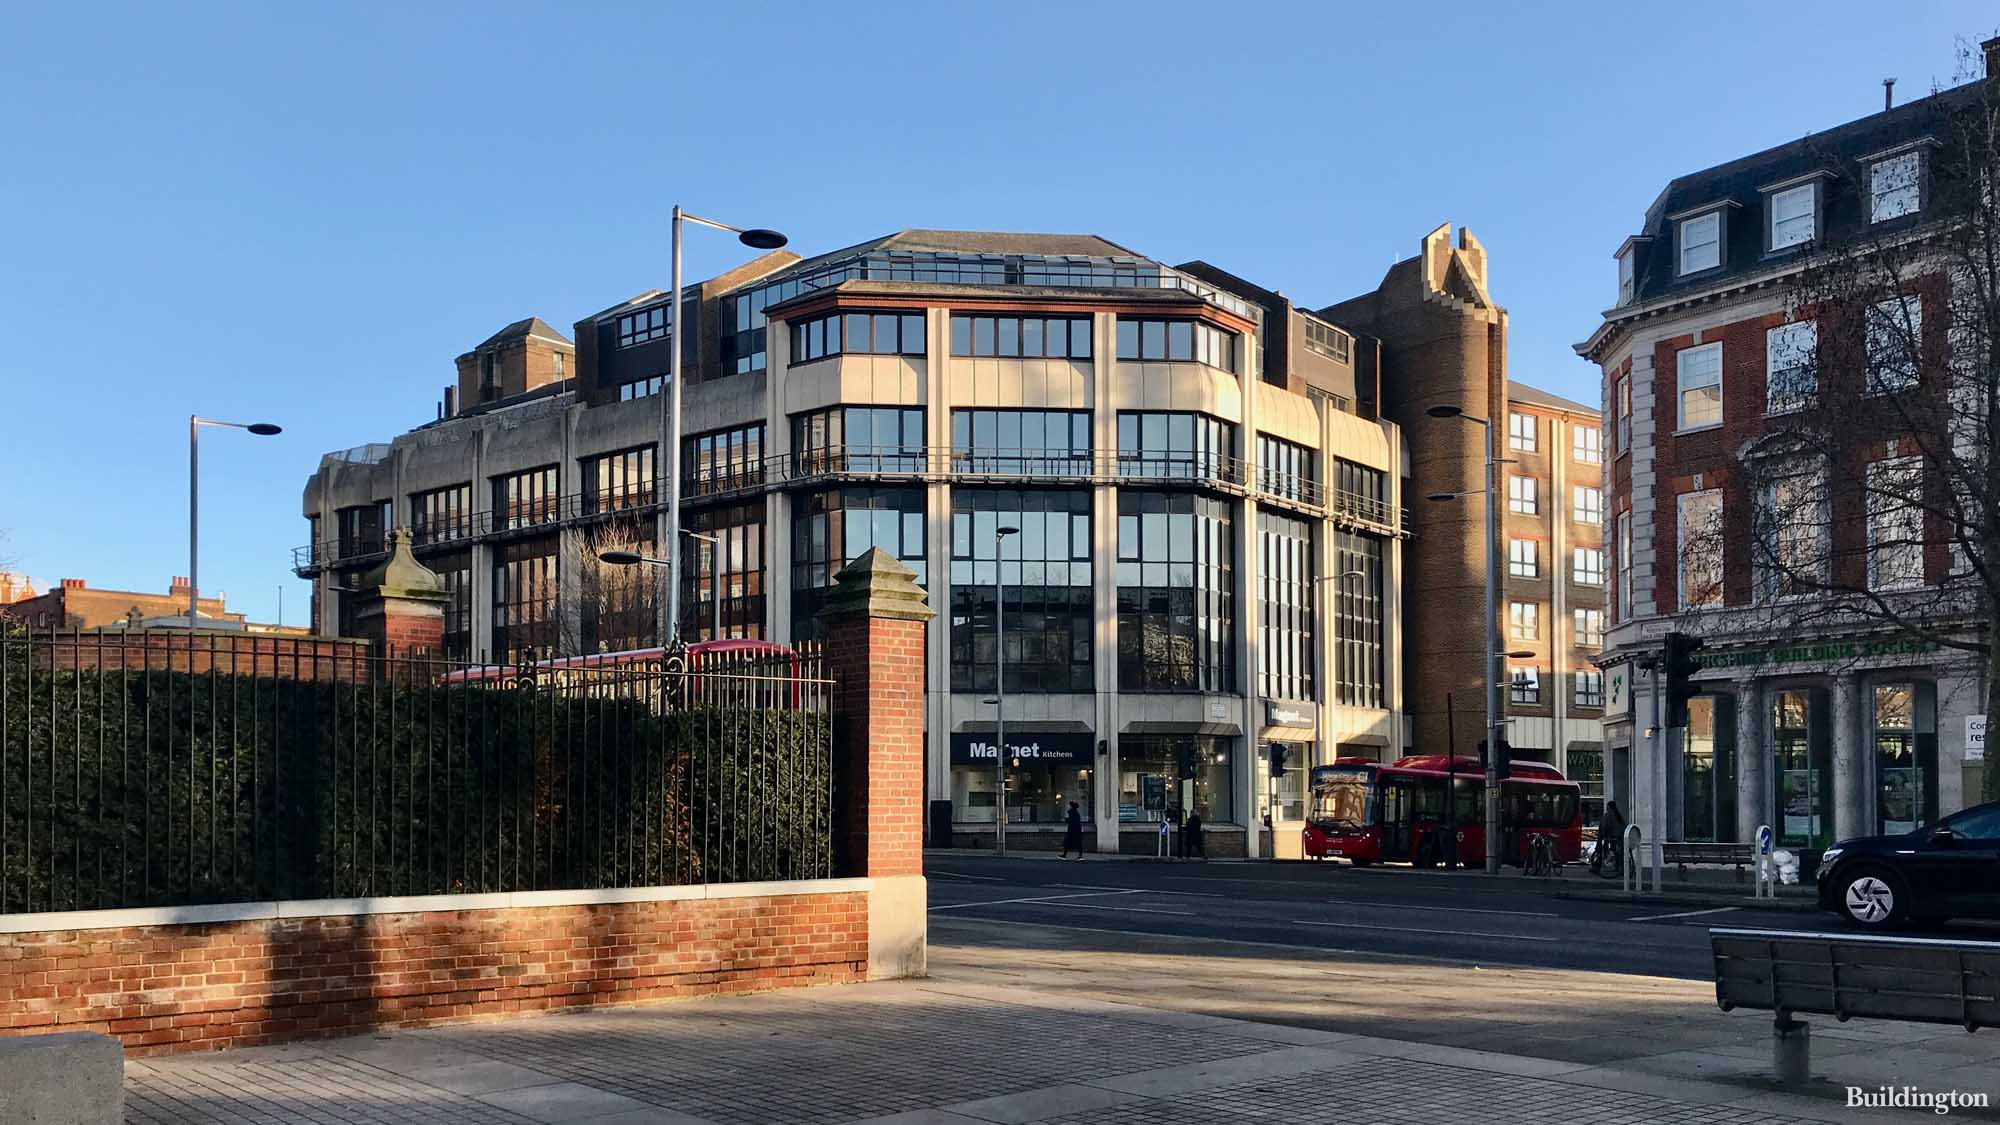 243 Kensington High Street building in Kensington, London W8.